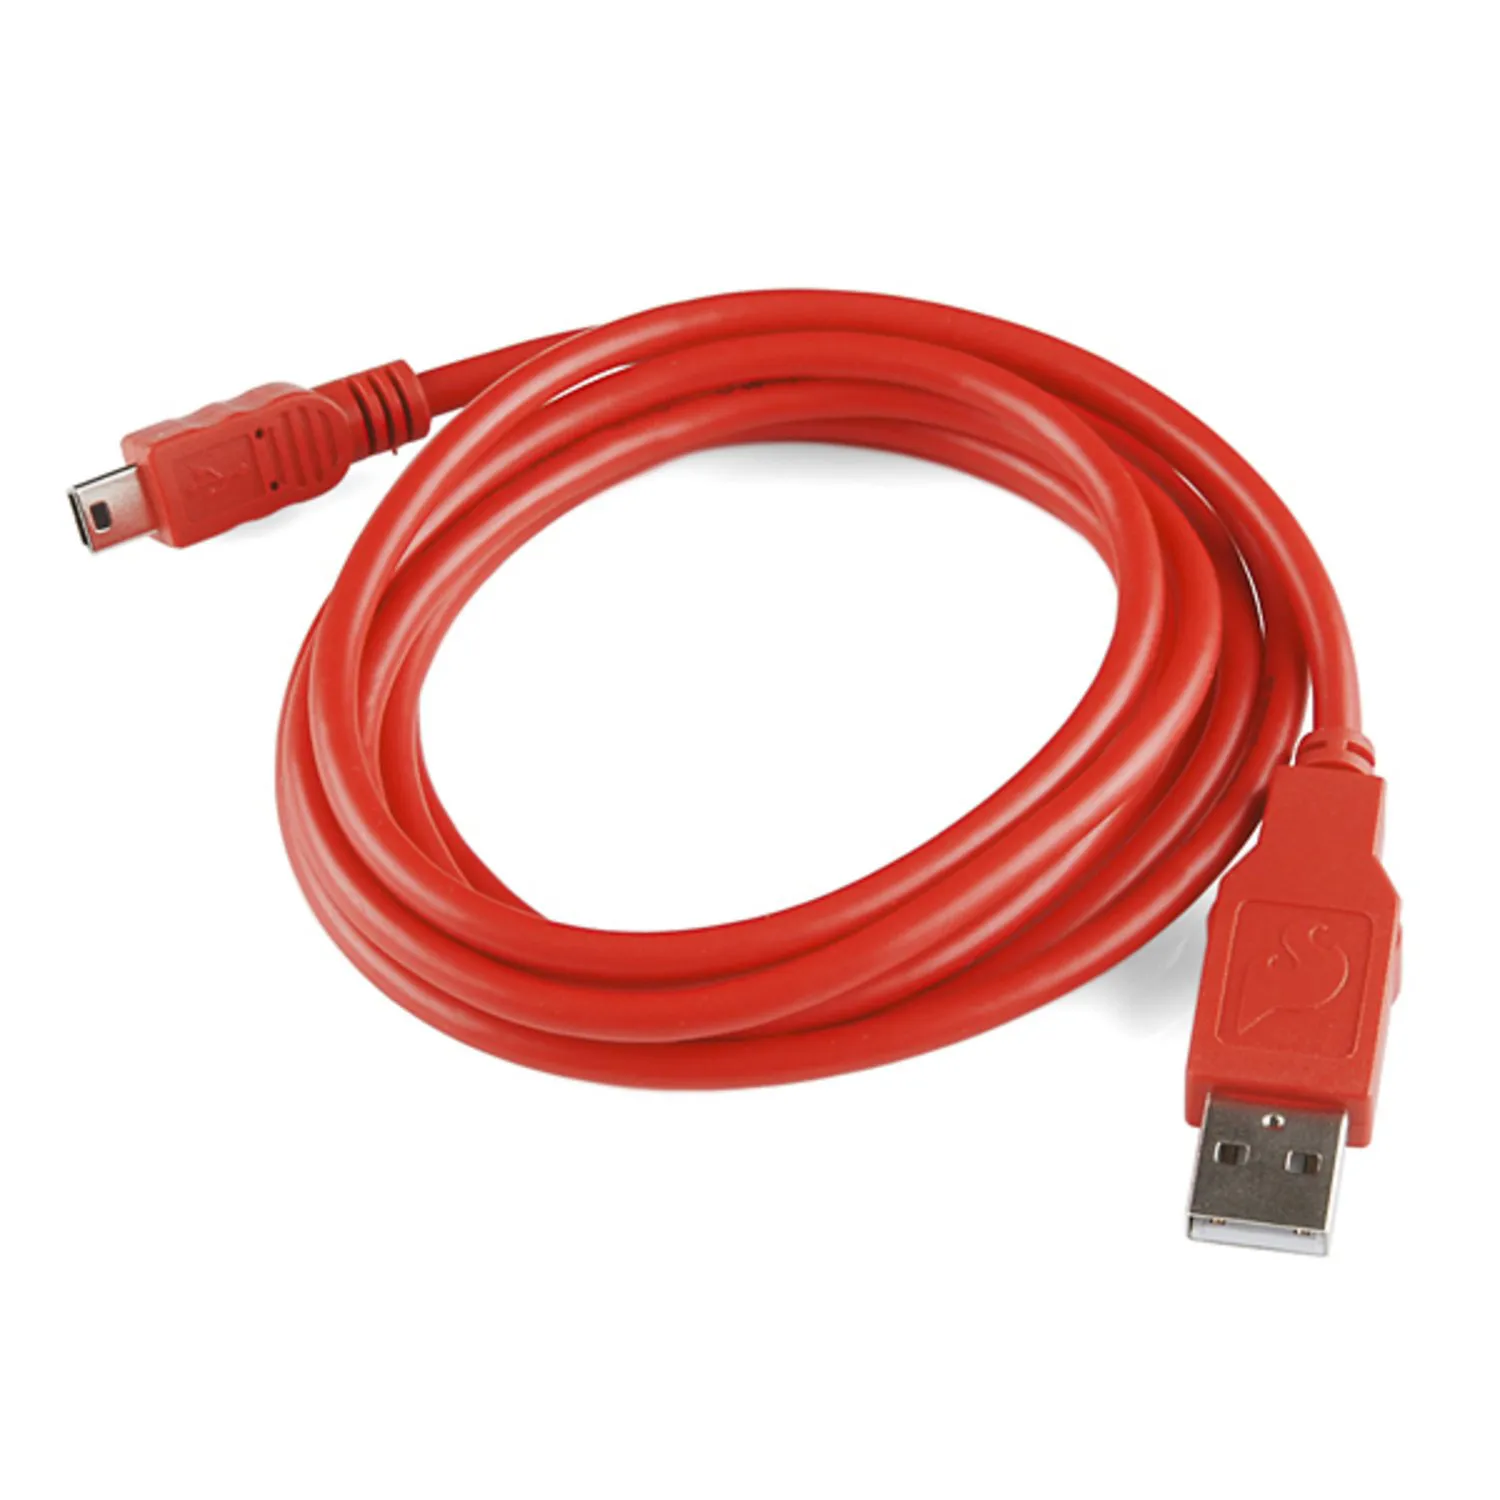 Photo of SparkFun USB Mini-B Cable - 6 Foot